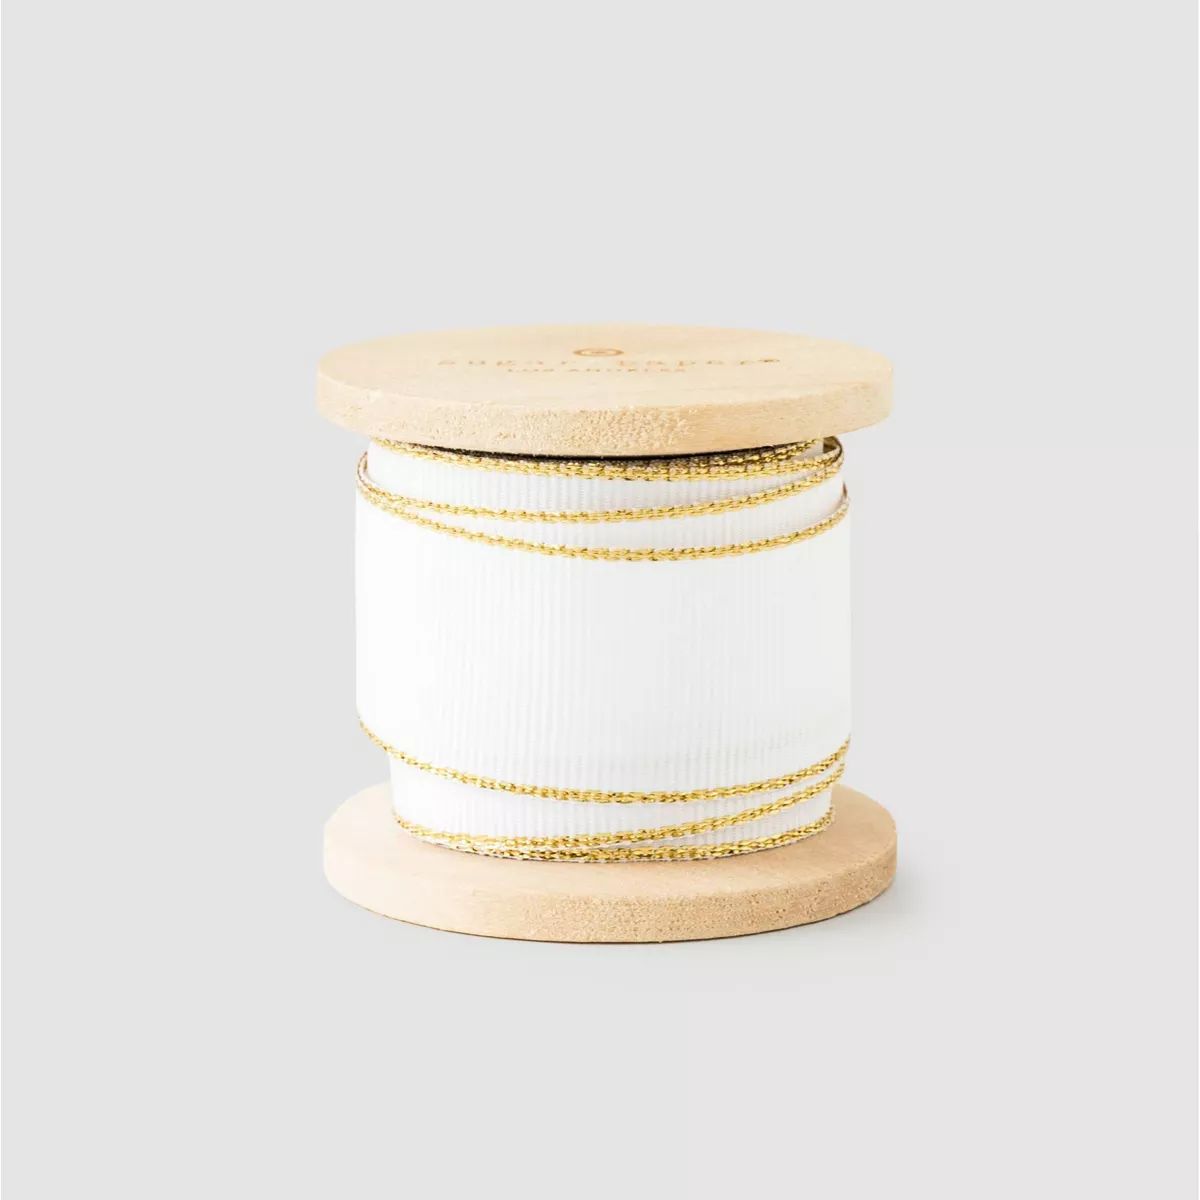 1" Grosgrain Fabric Ribbon 15' White/Gold Edge - Sugar Paper™ + Target | Target